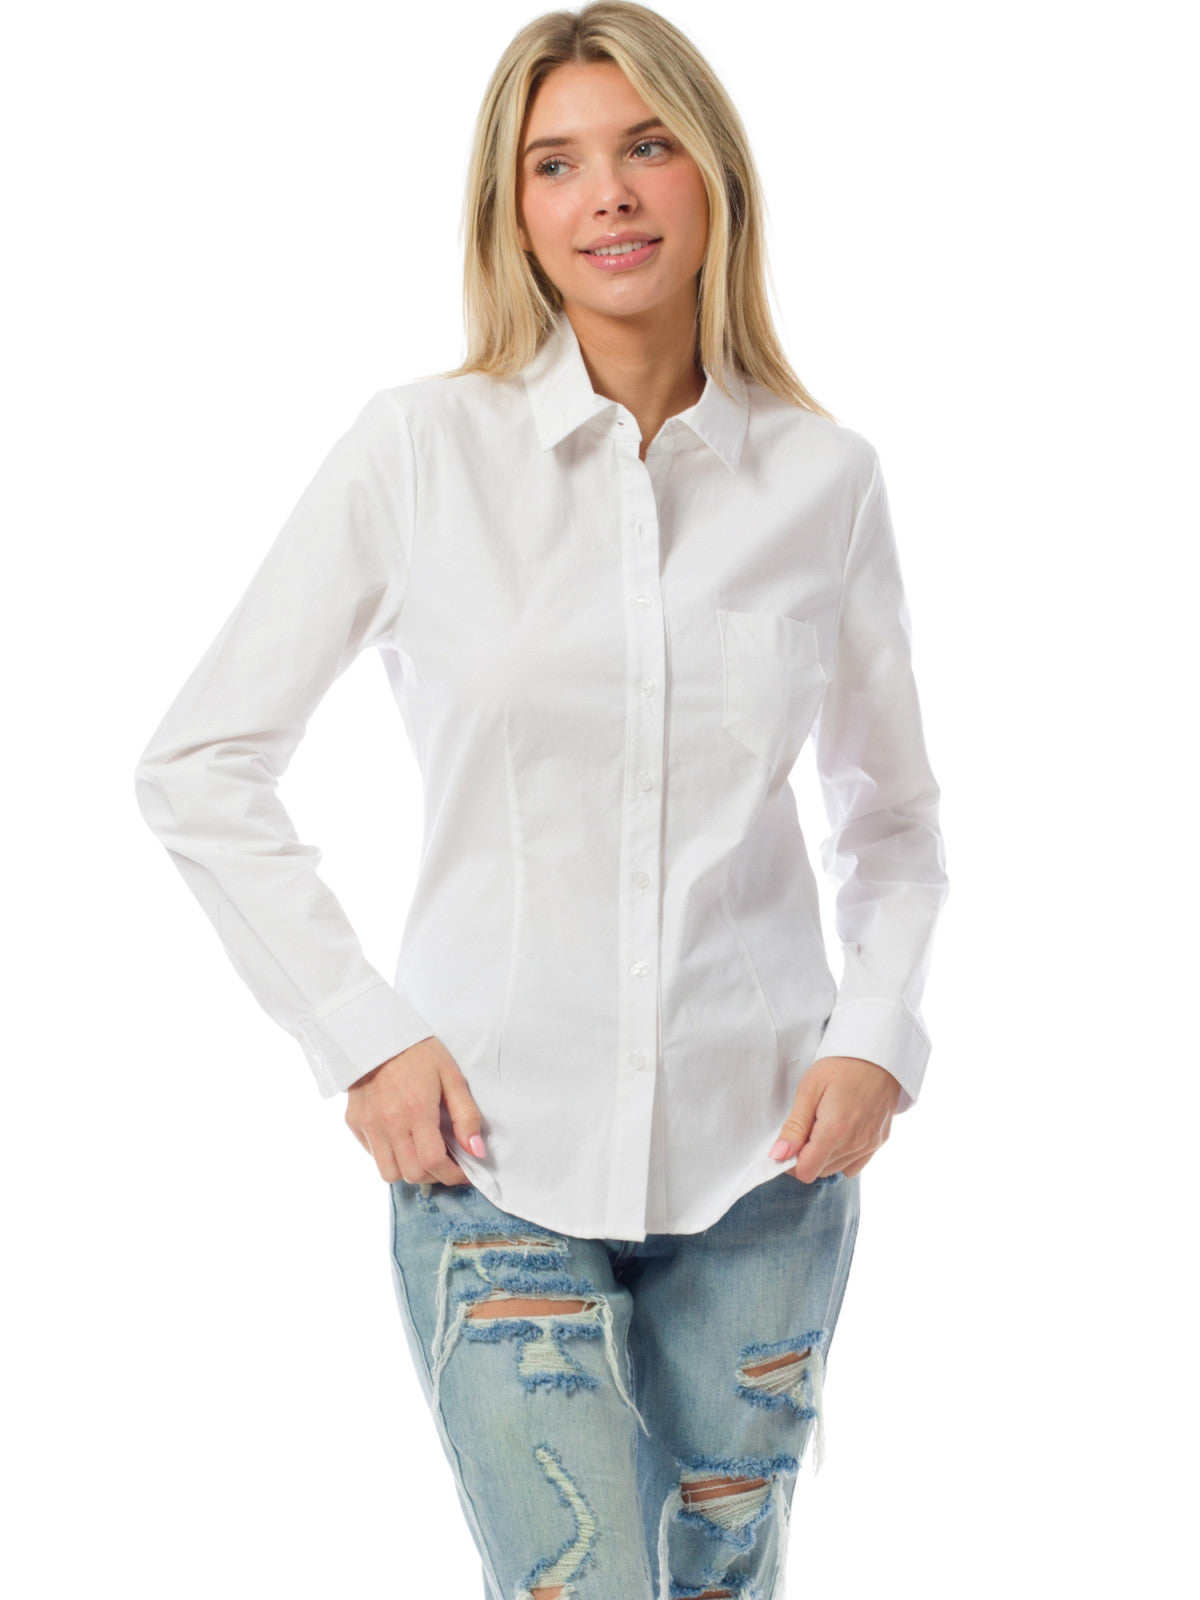 Plain Long Sleeve Button Down Shirts Formal Work Dress Blouses Tops